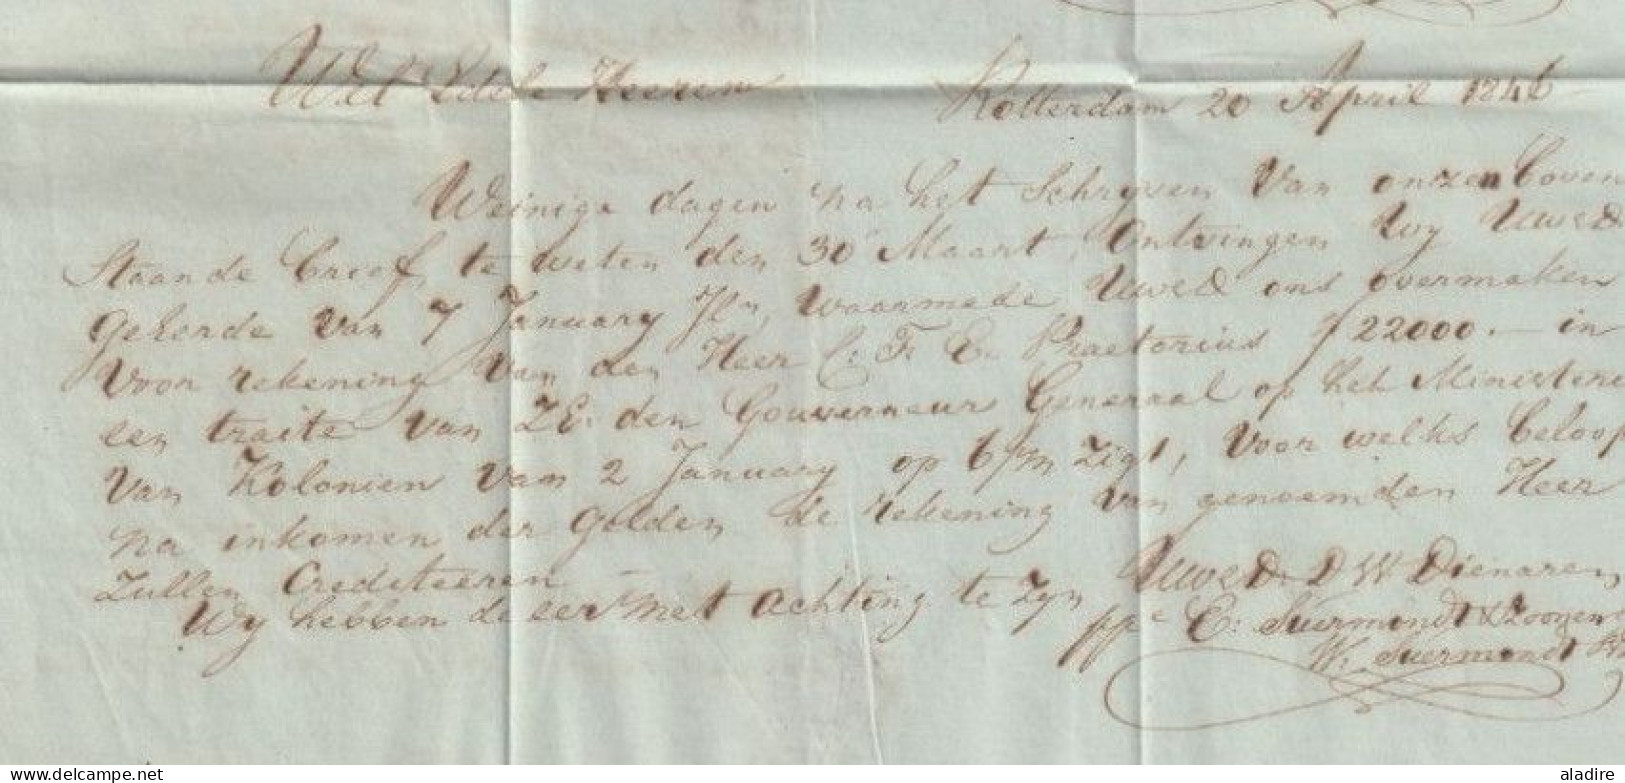 1855 - Entire 2-page Letter From CHERIBON Today CIREBON, Java, Indonesia   To BATAVIA, Today DJAKARTA, Indonesia - Niederländisch-Indien